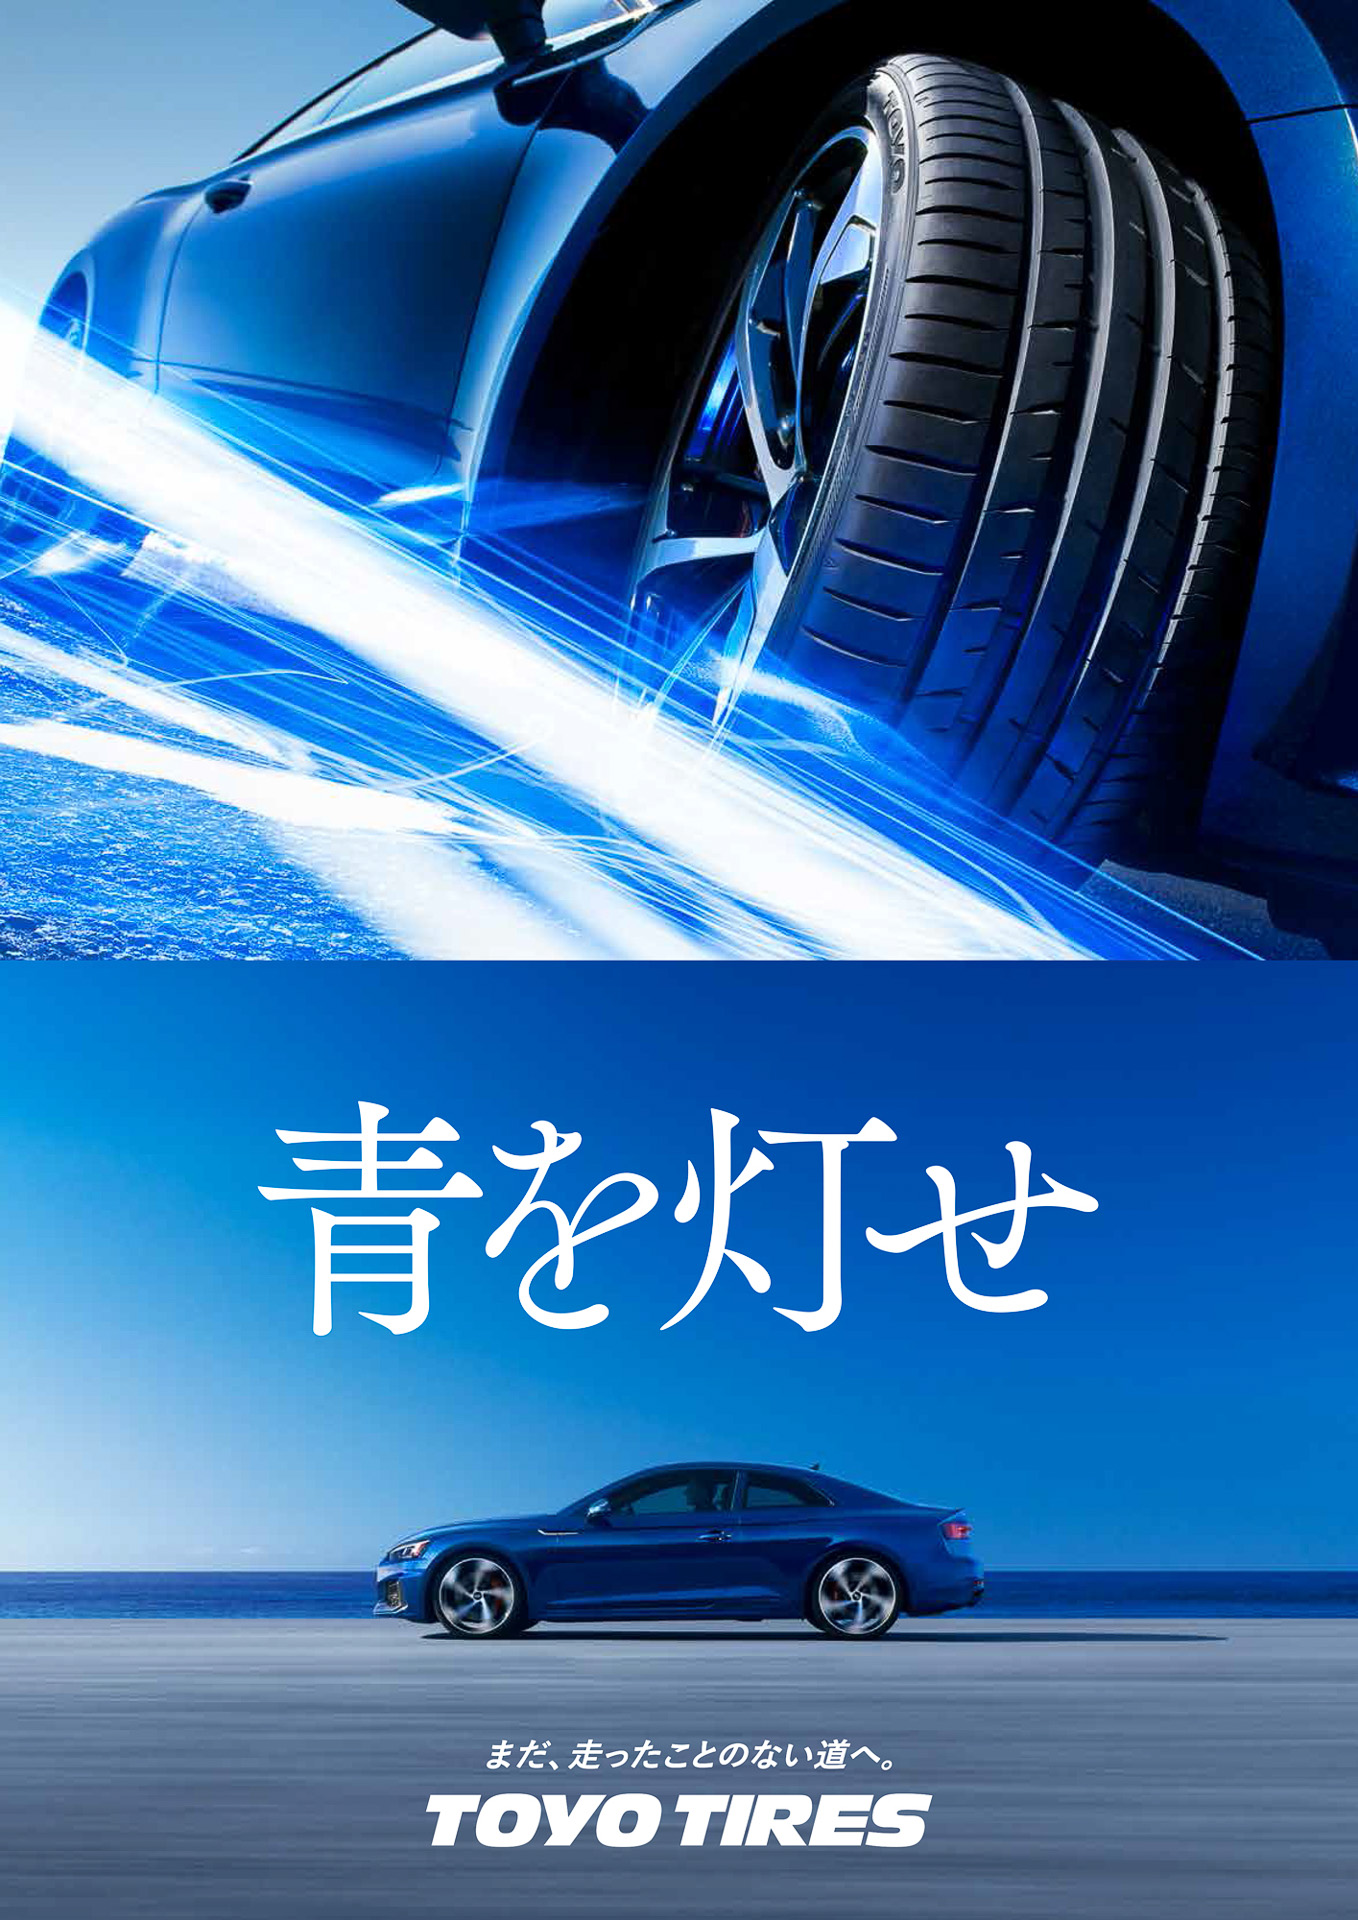 Toyo Tire 青い情景で 挑戦心 内なる情熱 を表現する新企業tv Cf Car Watch